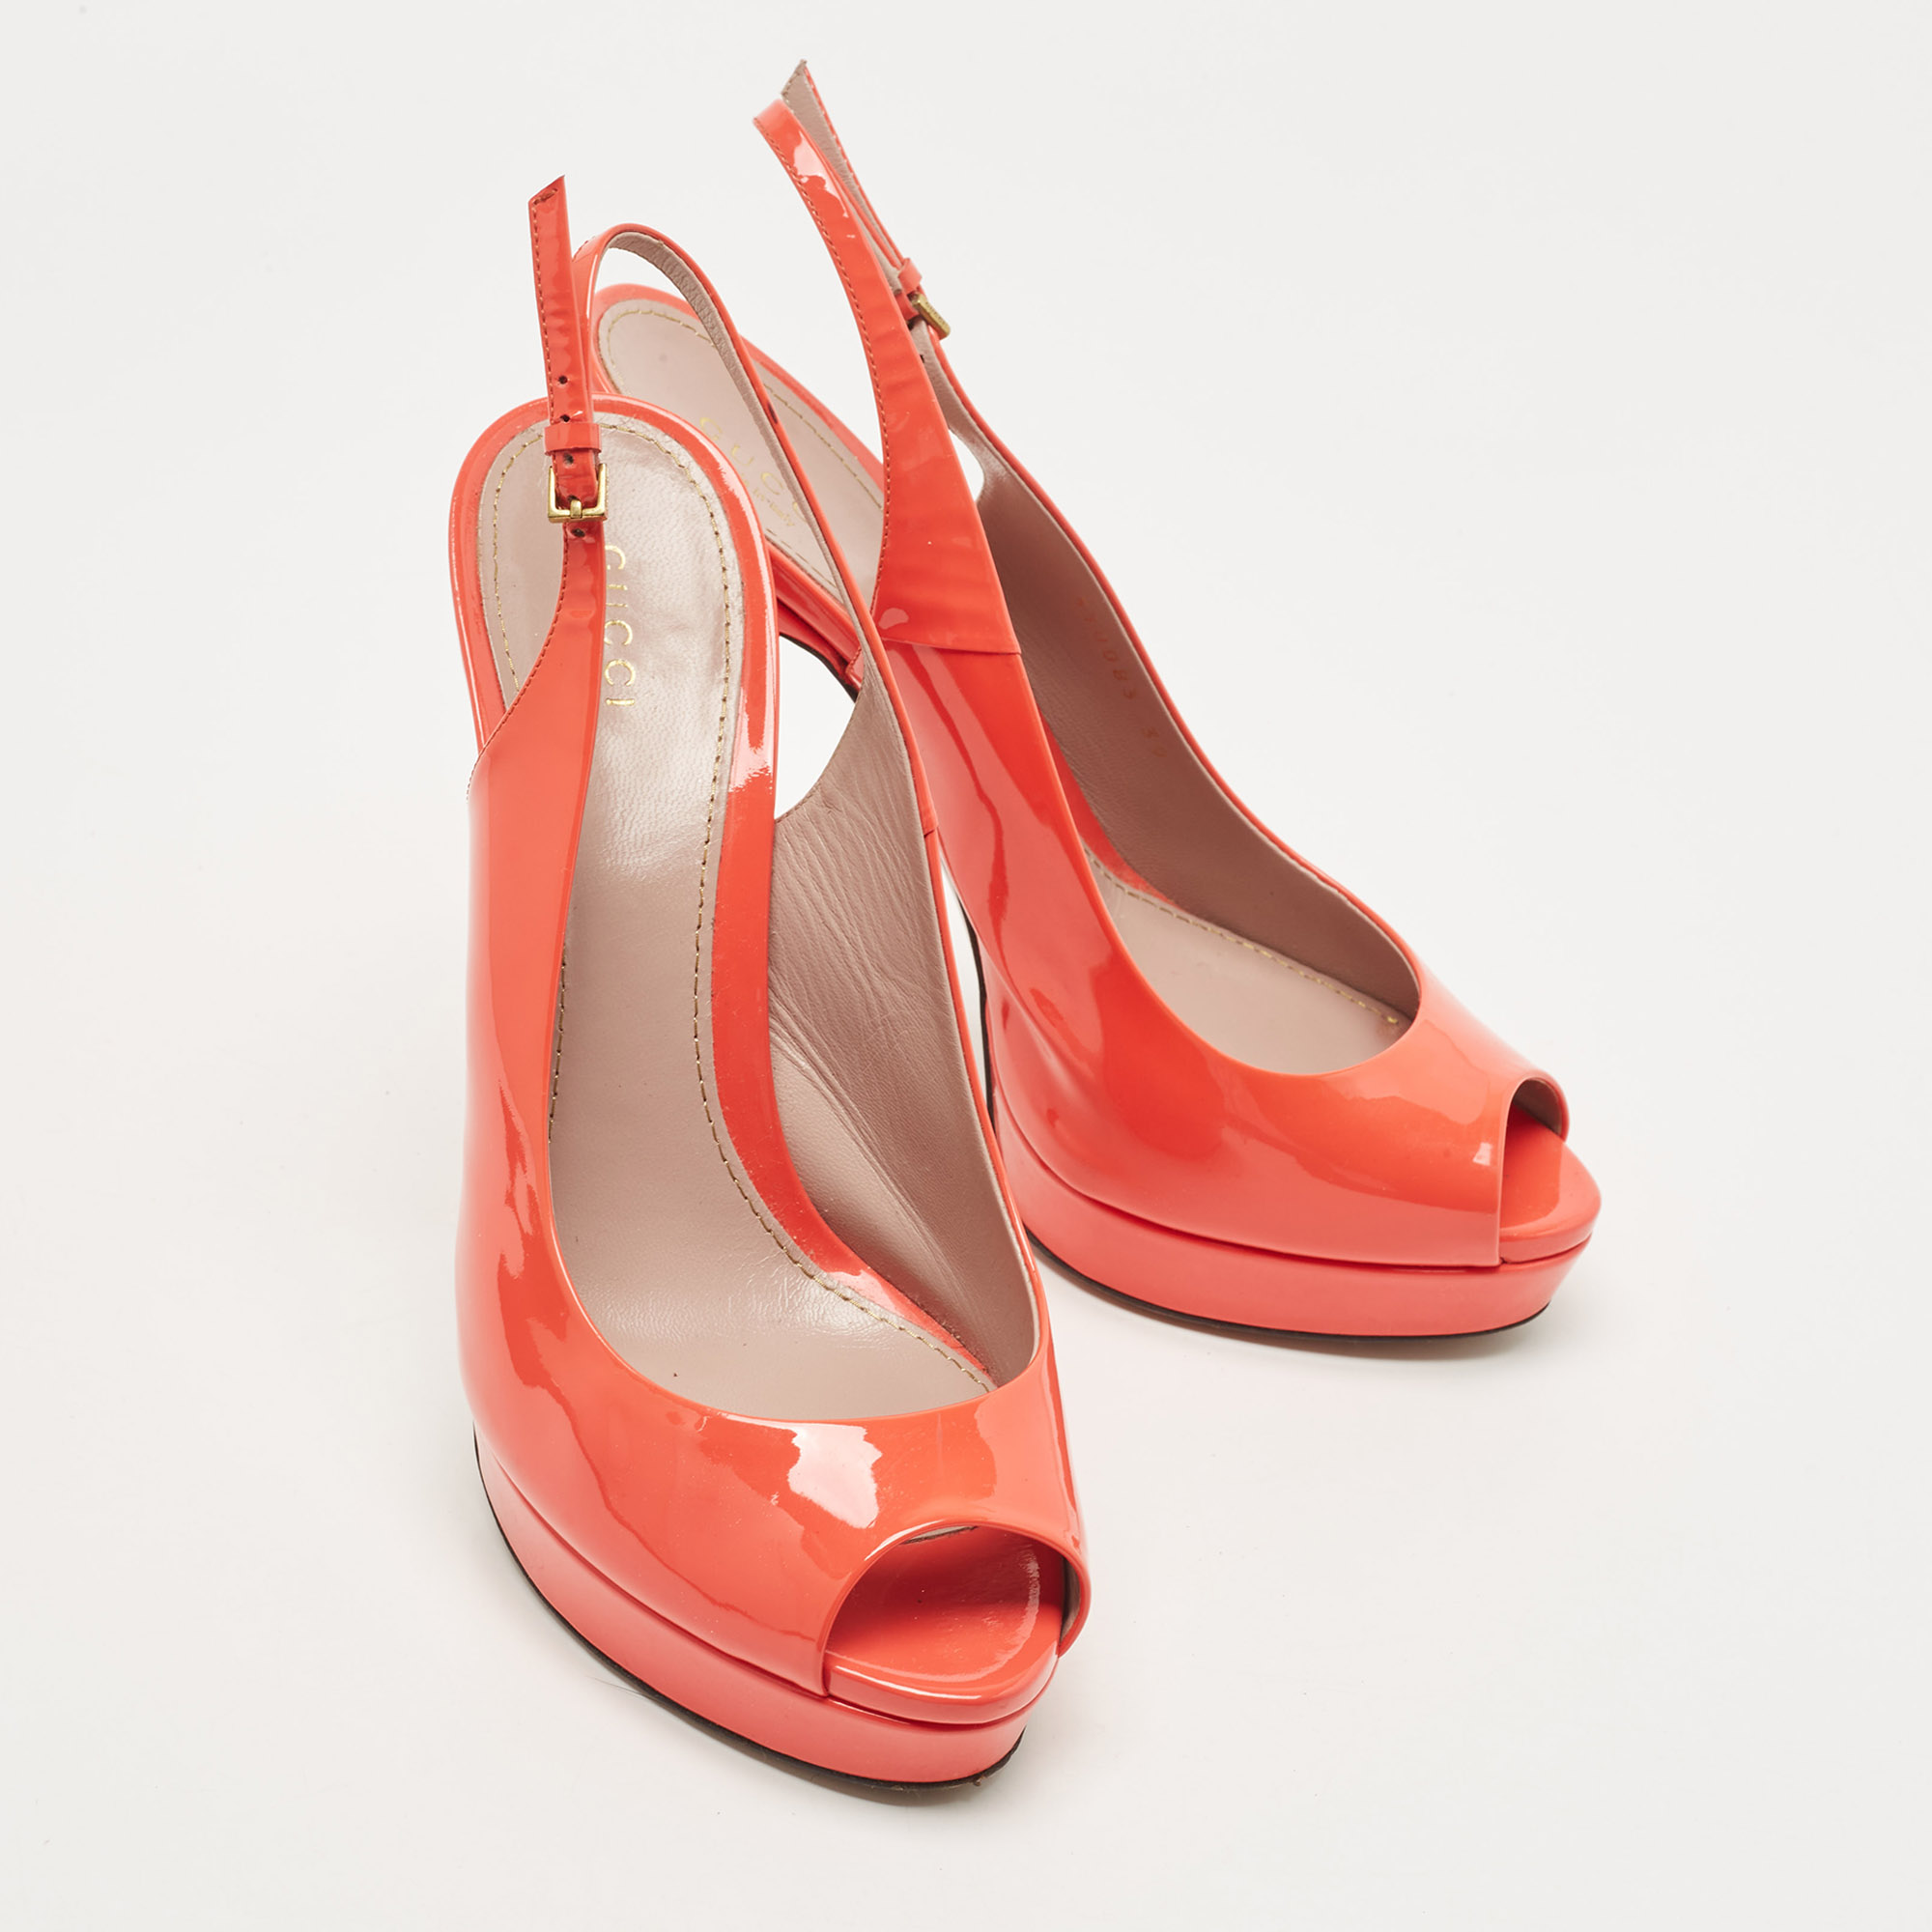 Gucci Orange Patent Leather Peep Toe Platform Pumps Size 39